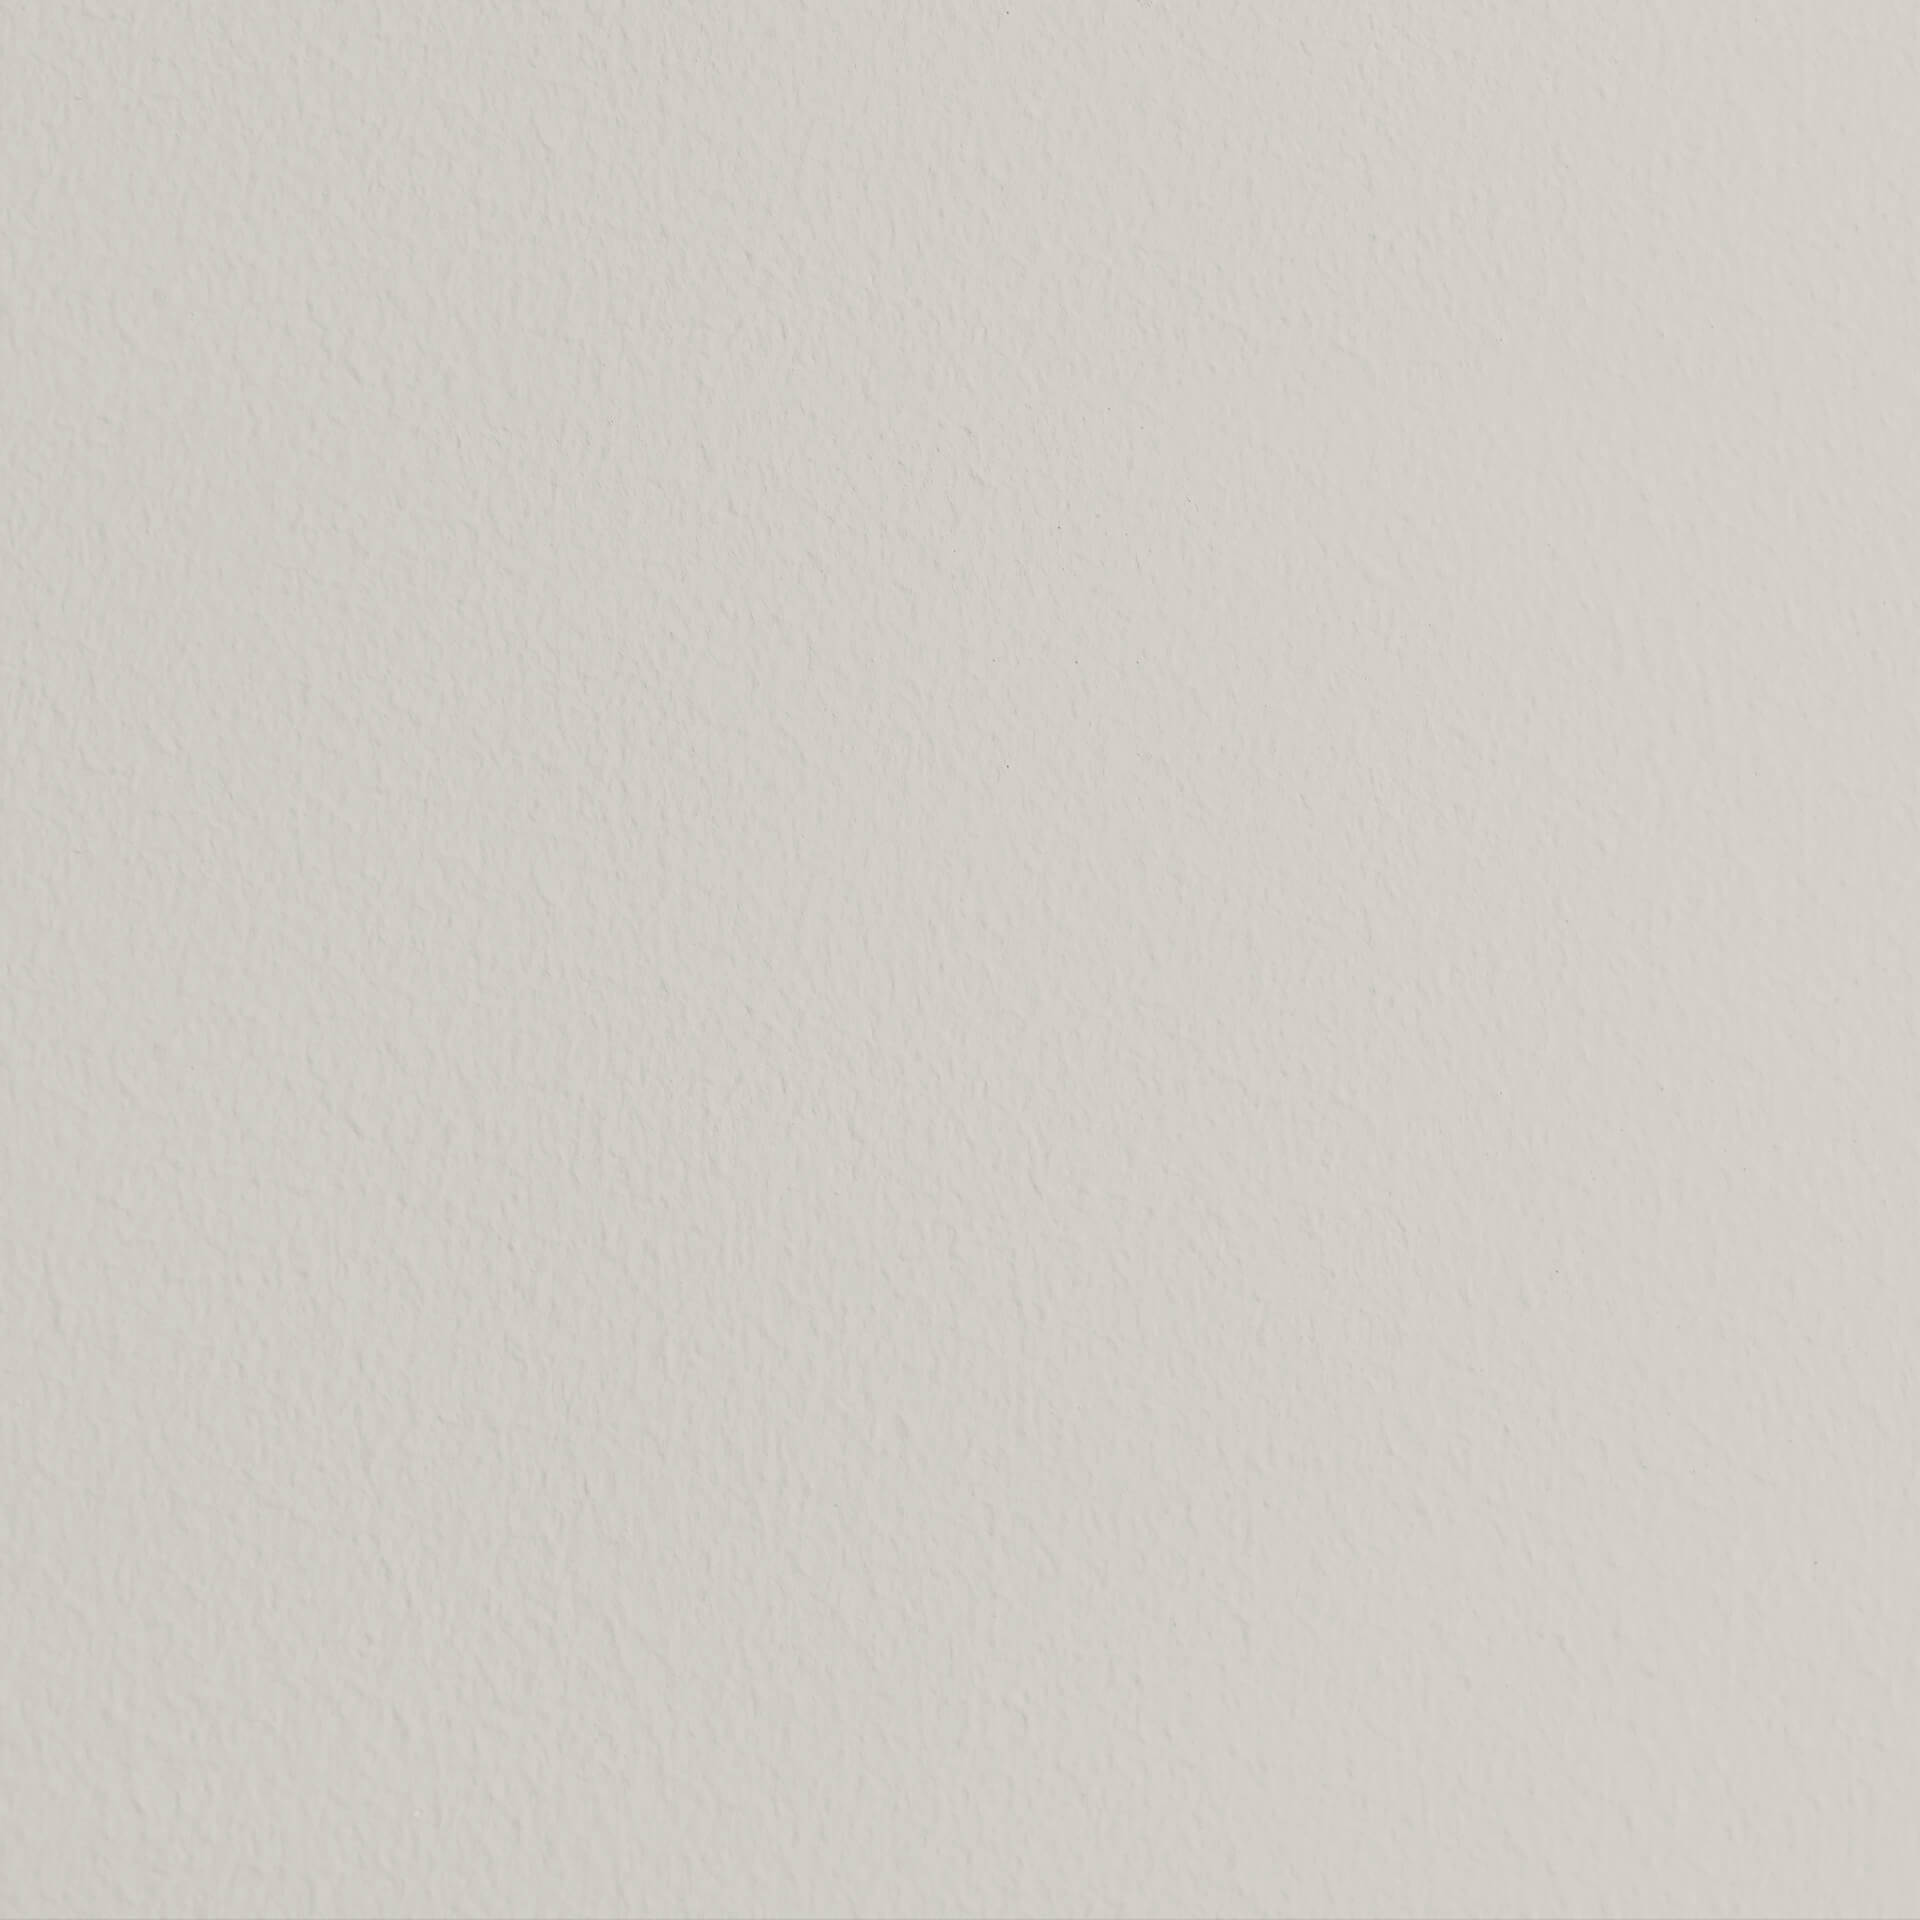 MissPompadour Beige with Cashmere - The Valuable Wall Paint 1L